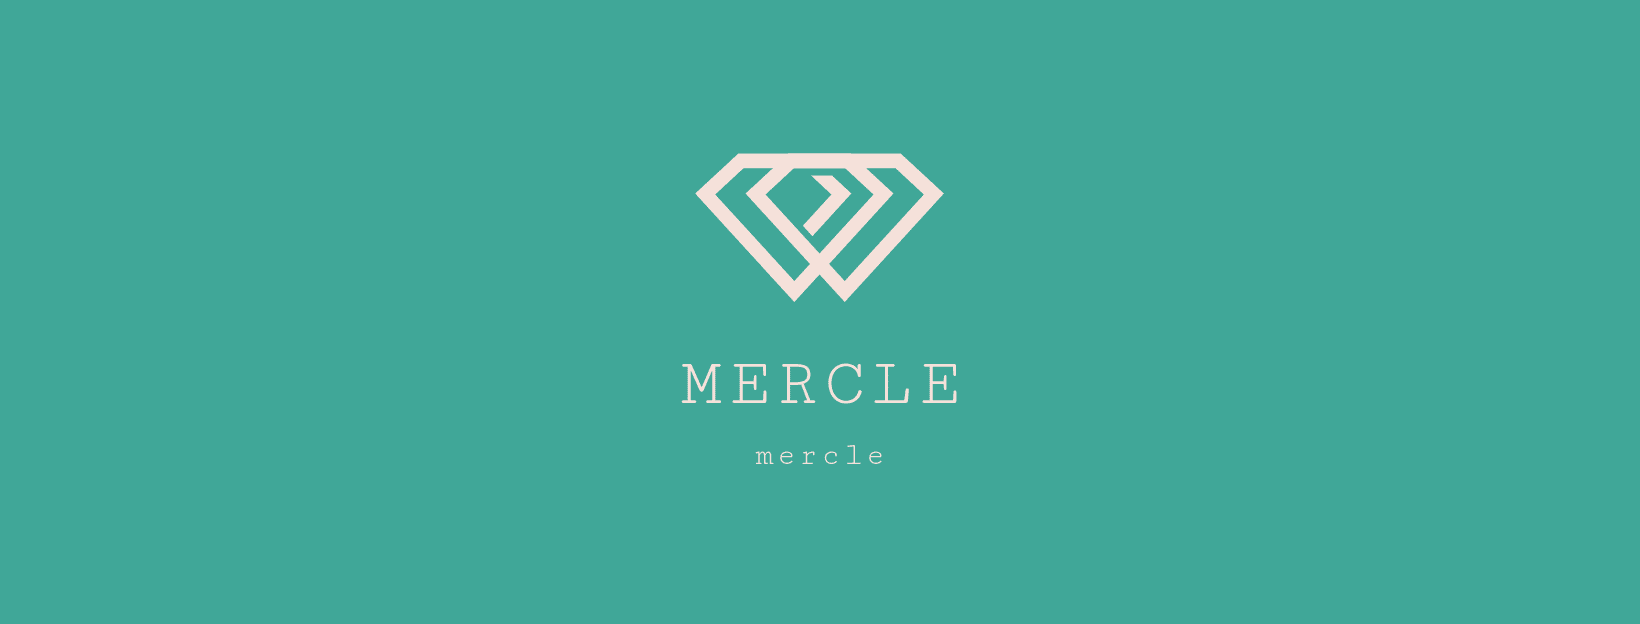 Mercle